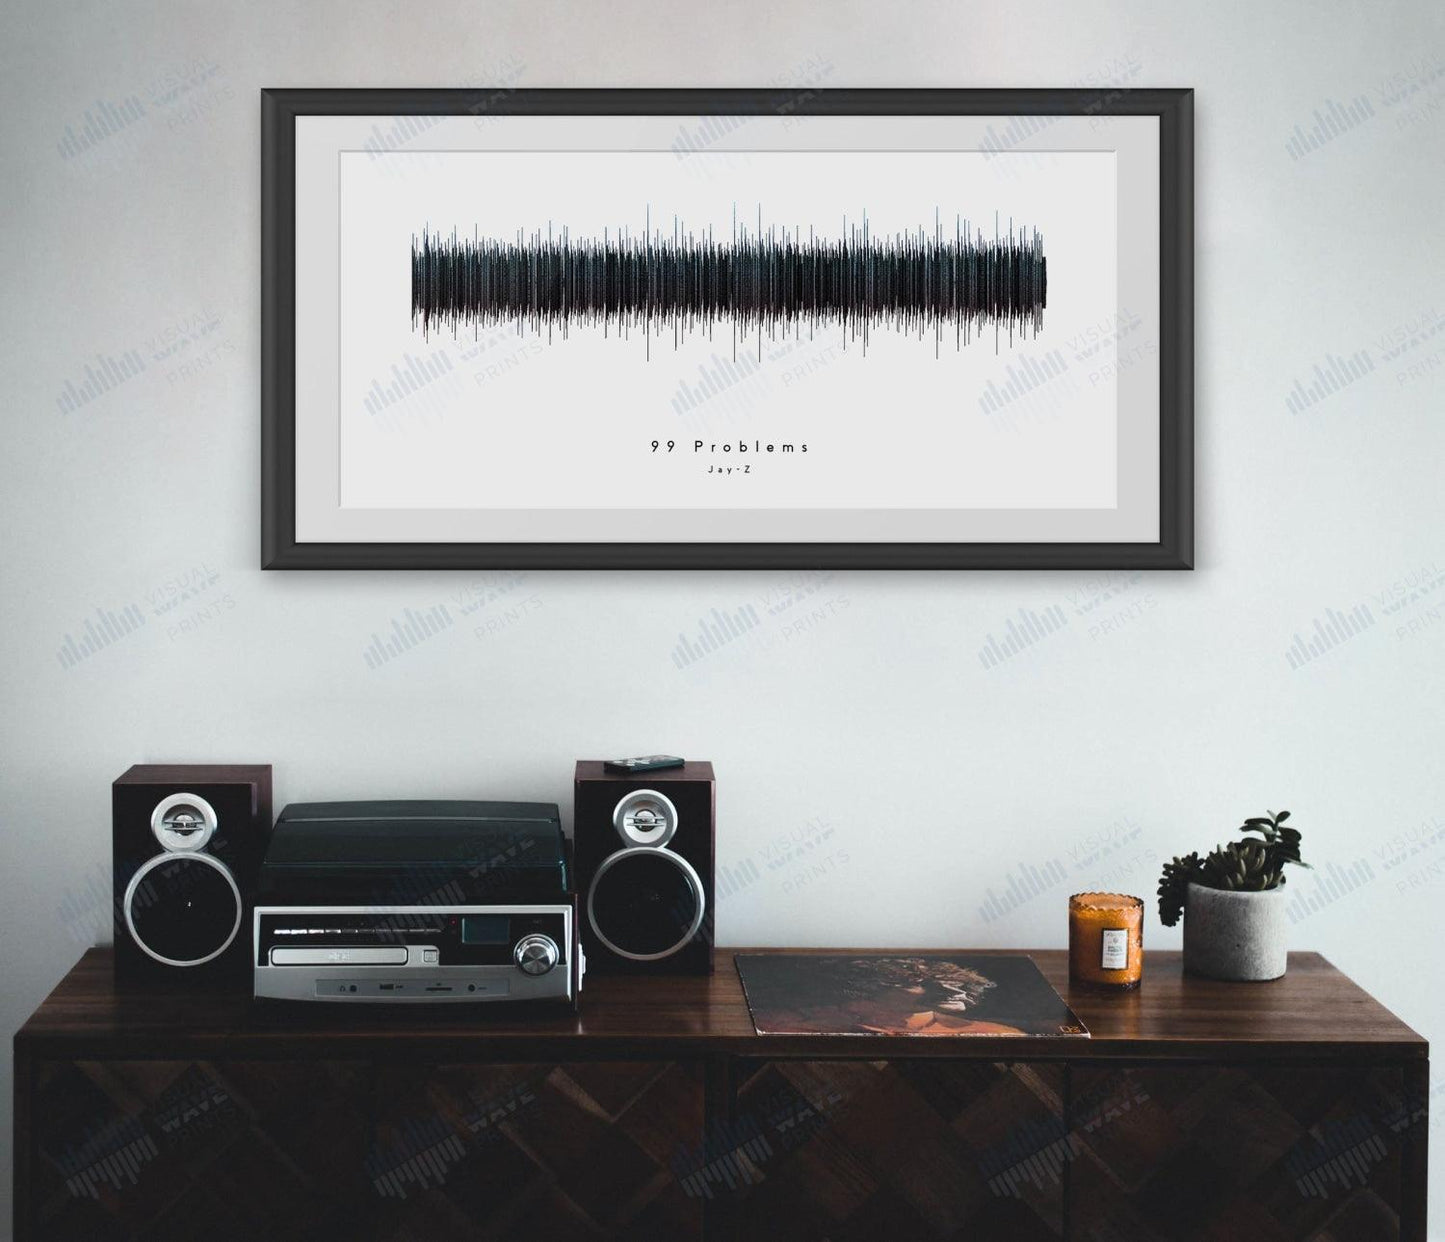 99 Problems by Jay-Z - Visual Wave Prints